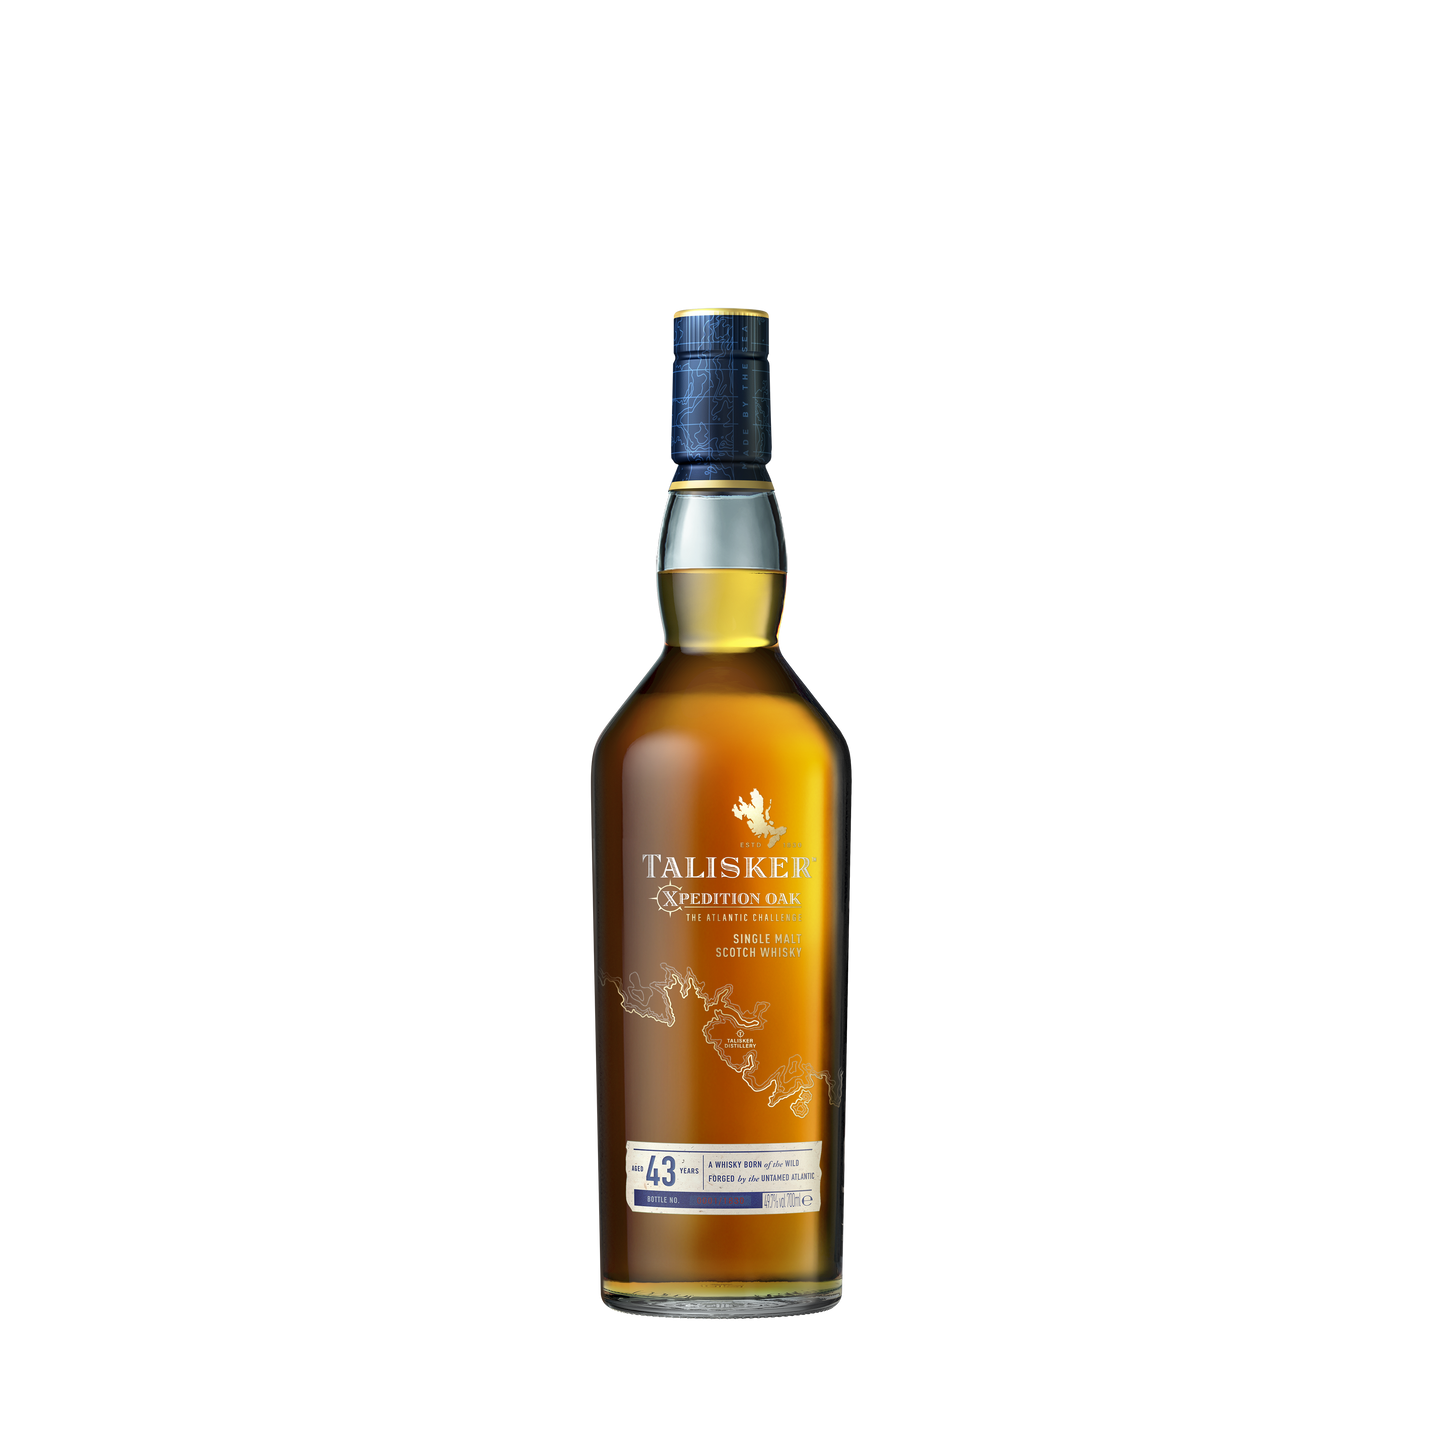 Talisker Xpedition Oak 43 Year Old Single Malt Scotch Whisky 700ml